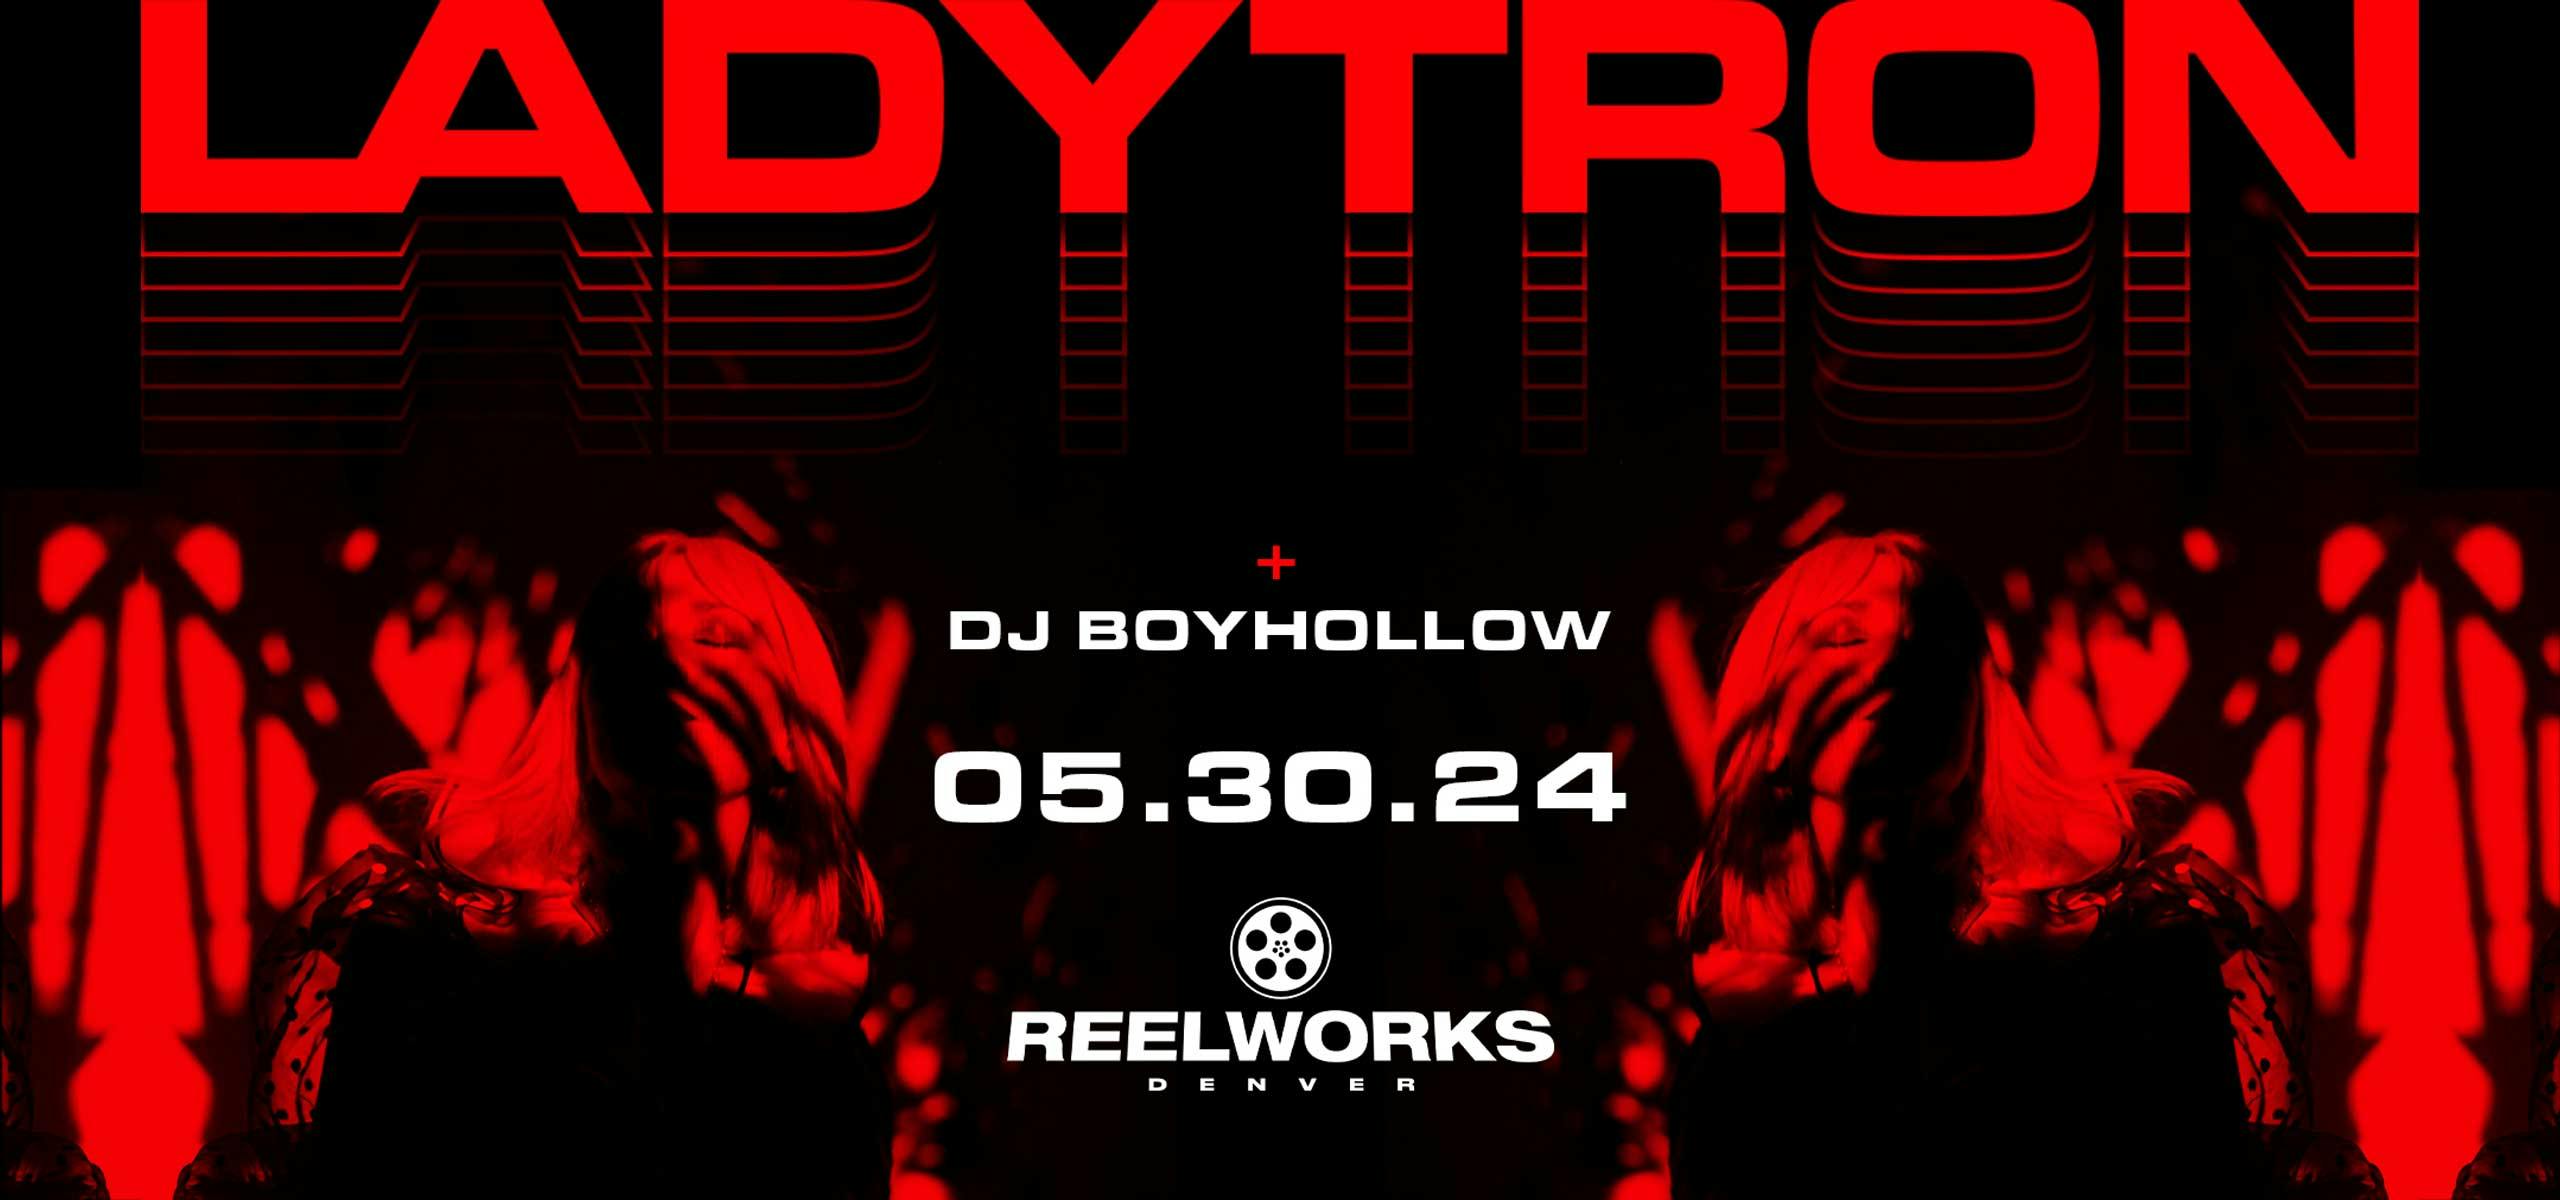 LADYTRON LIVE AT REELWORKS DENVER at Reelworks - Thursday, May 30